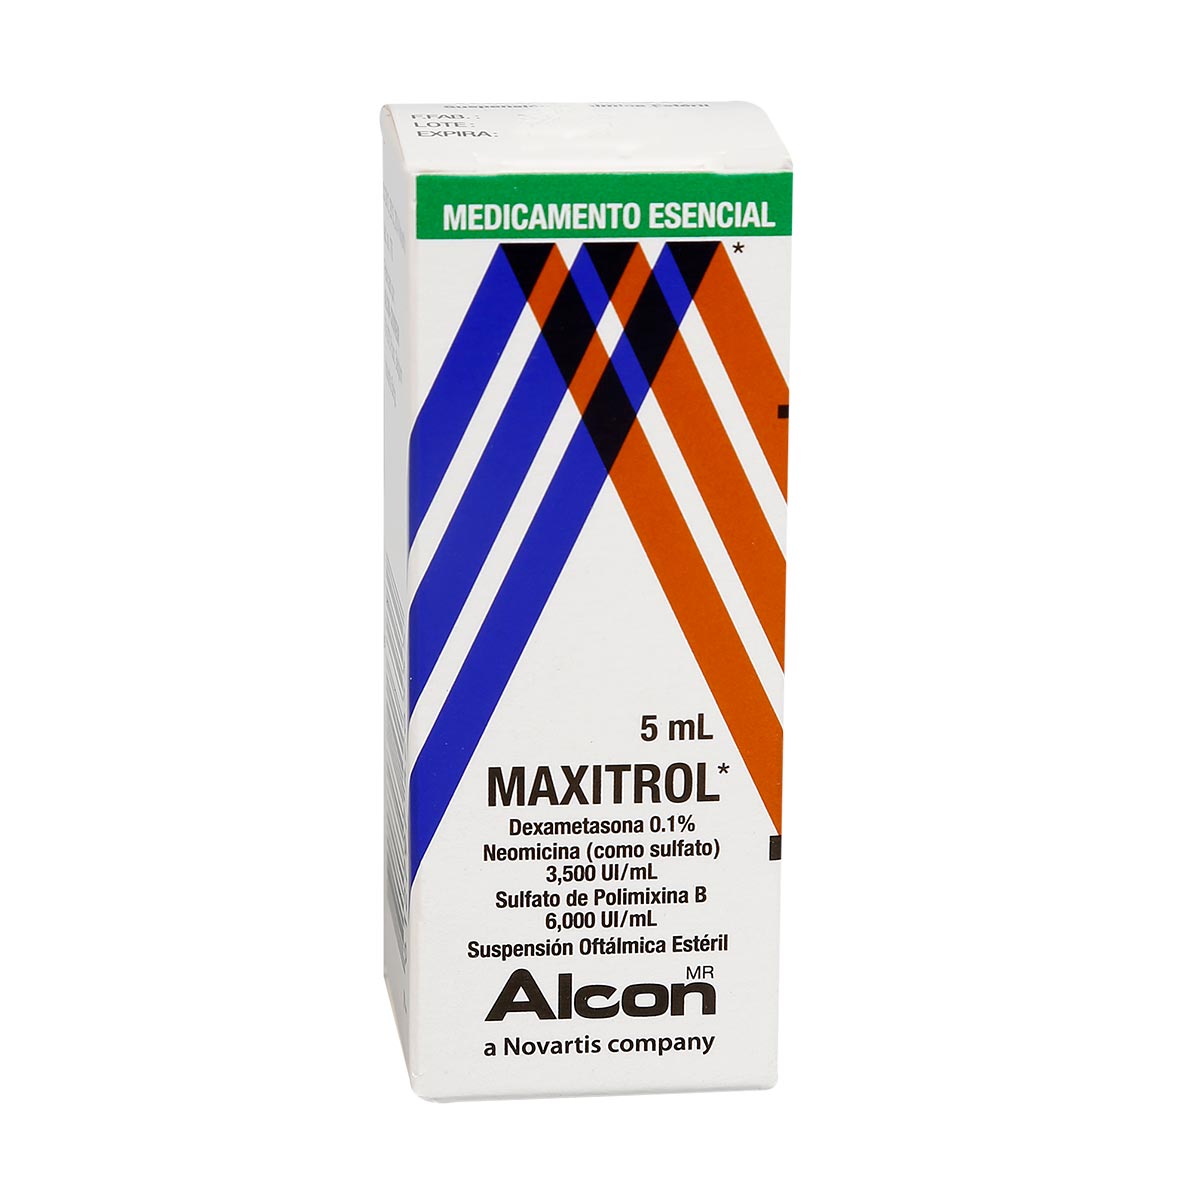 Maxitrol alcon para que sirve alcon blue light filter